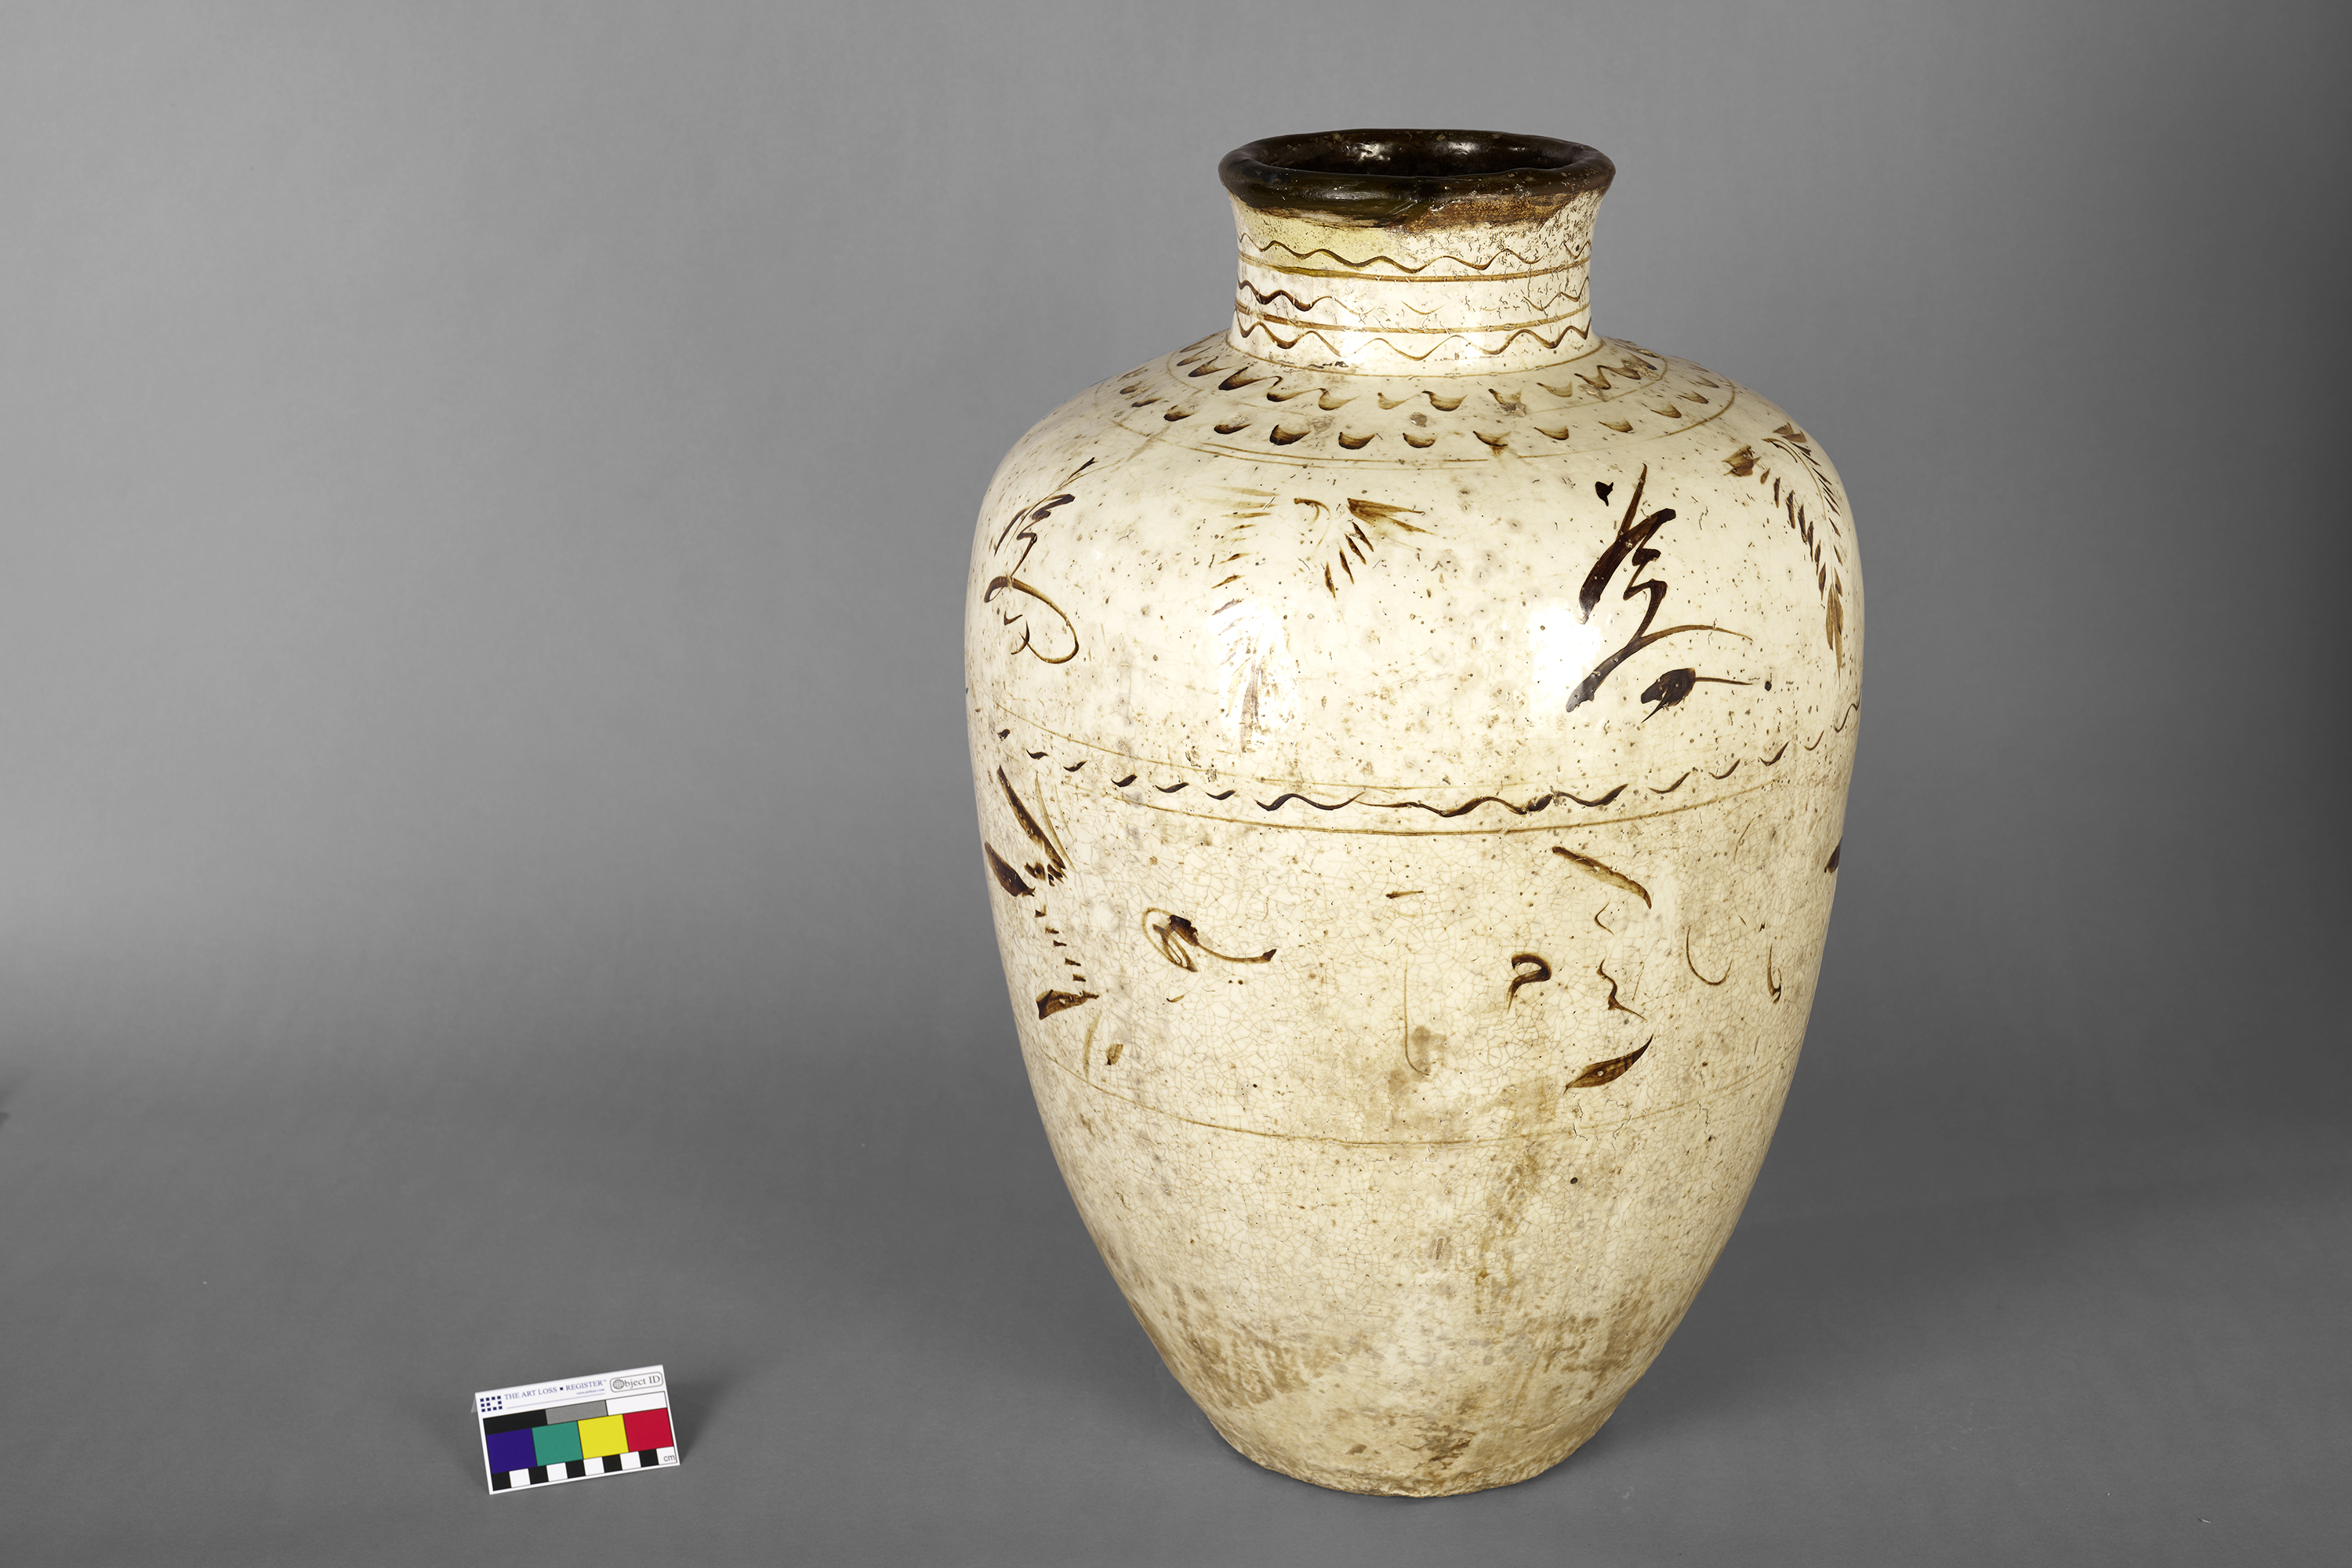 Cizhou wine vessel from the Ming Dynasty. Photo: Flurin Bertschinger, NL